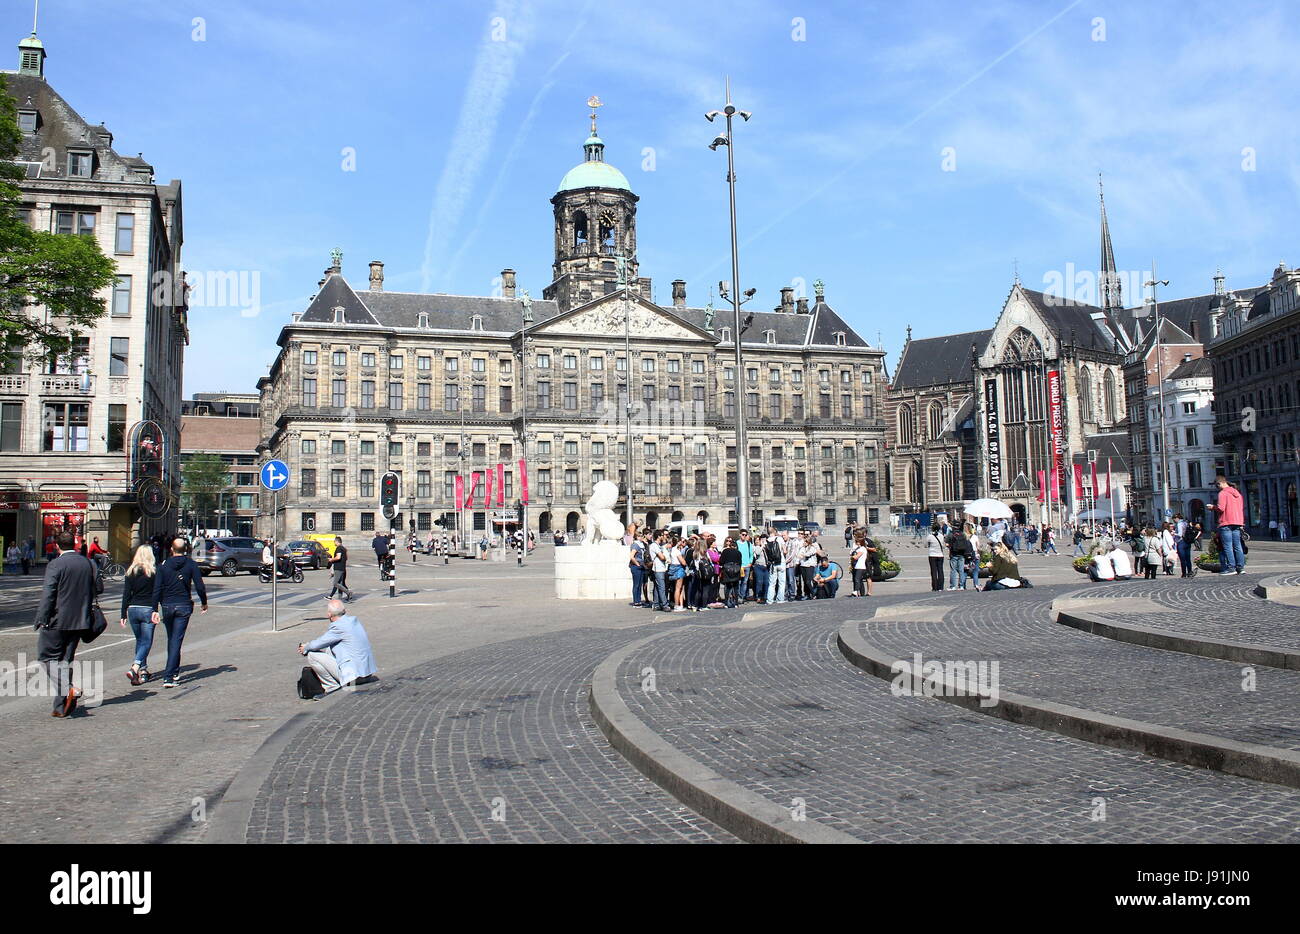 Panorama di affollata piazza Dam, centro di Amsterdam, Paesi Bassi. Xvii secolo Paleis op de Dam - Palazzo reale di Amsterdam, sulla destra Nieuwe Kerk e chiesa Foto Stock